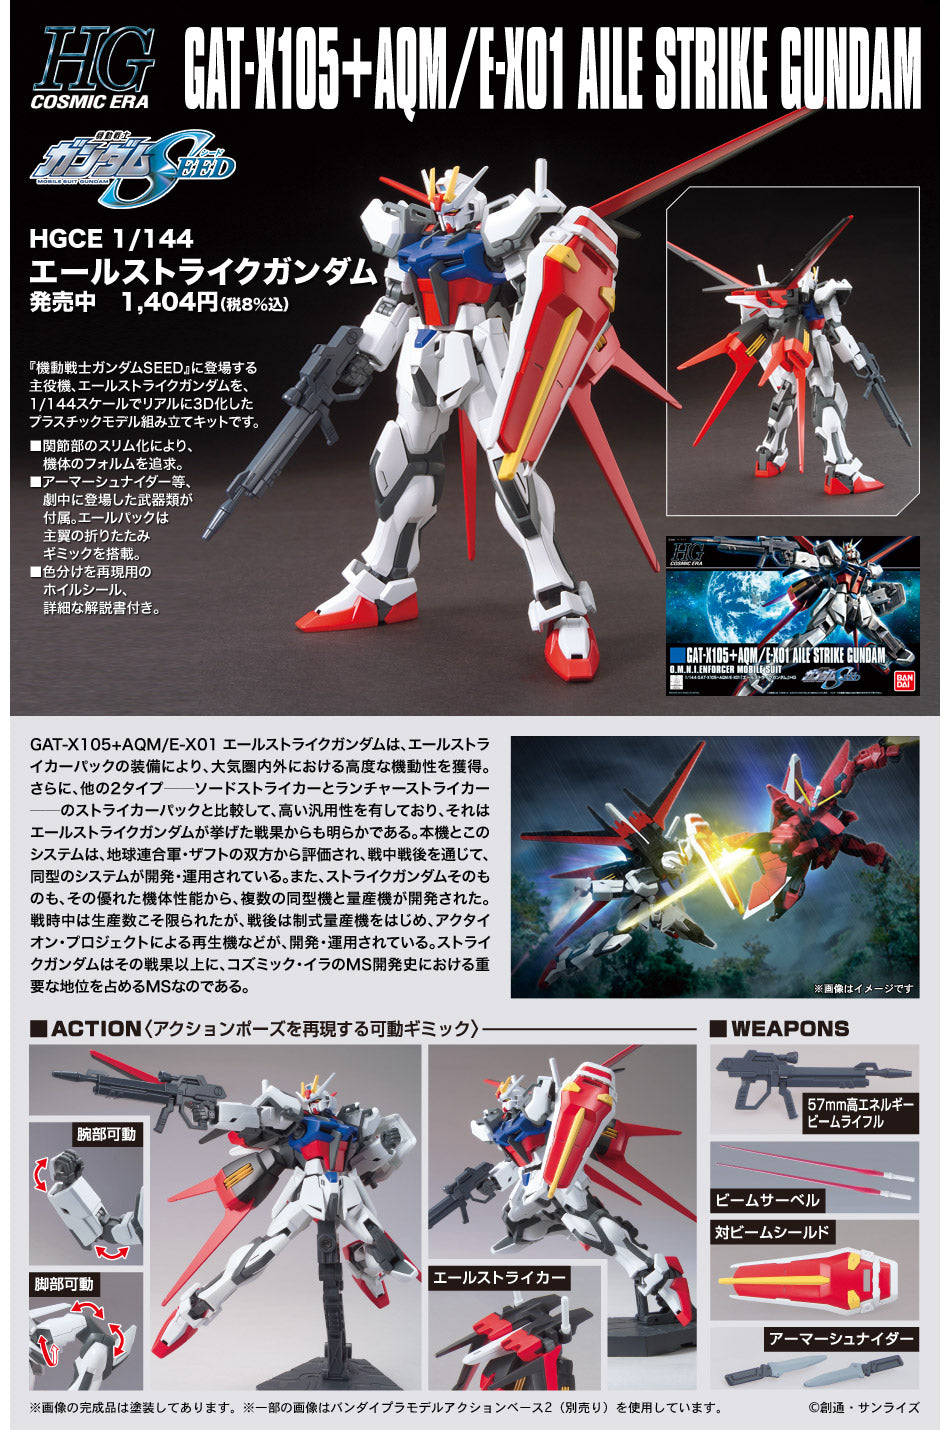 BAS2219525 Bandai HGCE 1/144 GAT-X105+AQM/E-X01 Aile Strike Gundam Model Kit